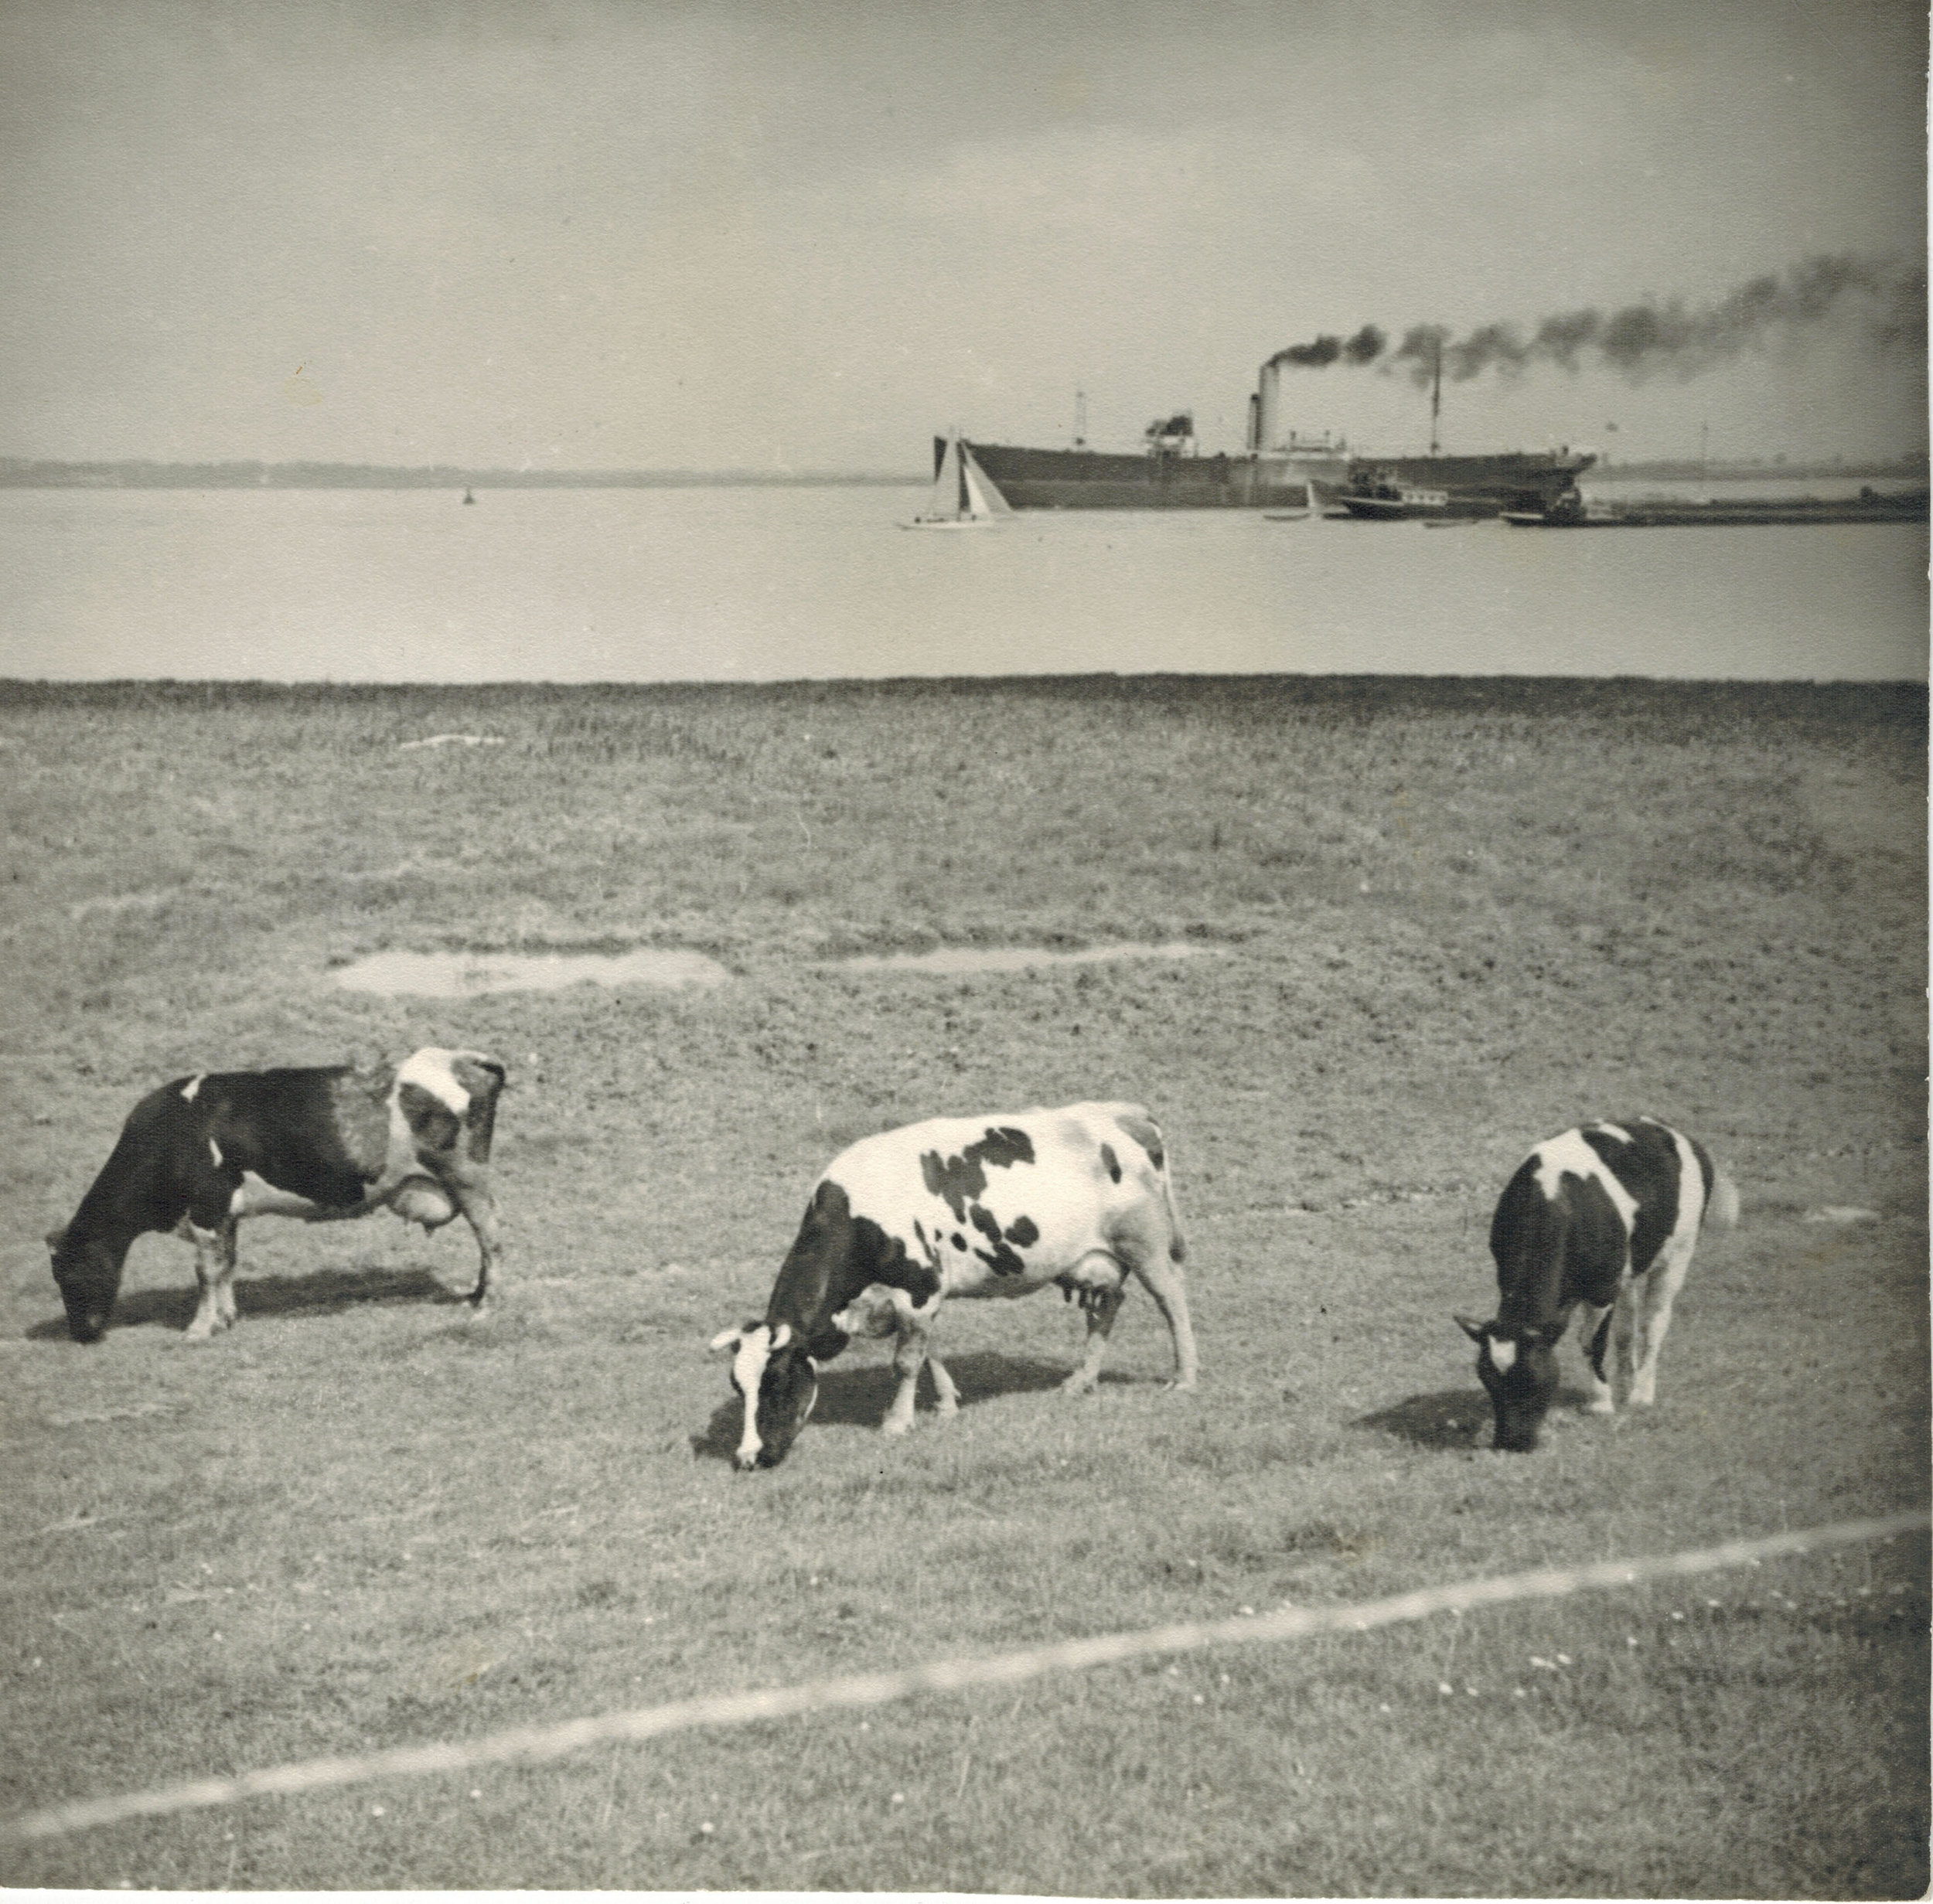  Albert Renger-Patzsch,  Cows grazing with steamship behind (Landscape in Northern Germany) , 1930, Gelatin silver print, stamped verso, 17.2 x 17.2 cm 